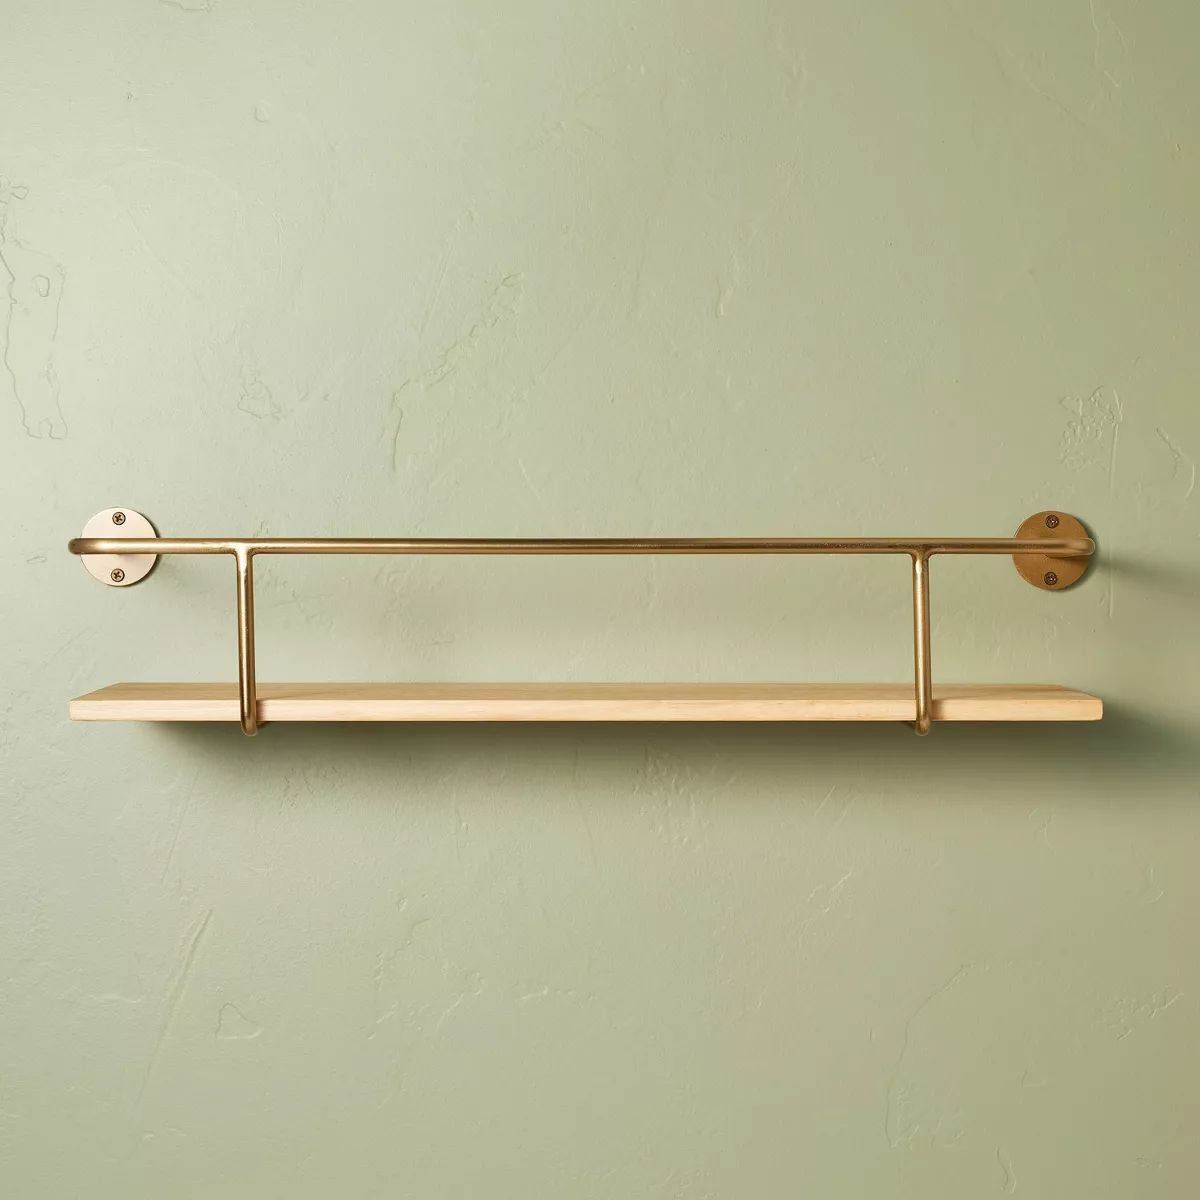 Wood & Brass Decorative Rail Wall Shelf - Hearth & Hand™ with Magnolia | Target